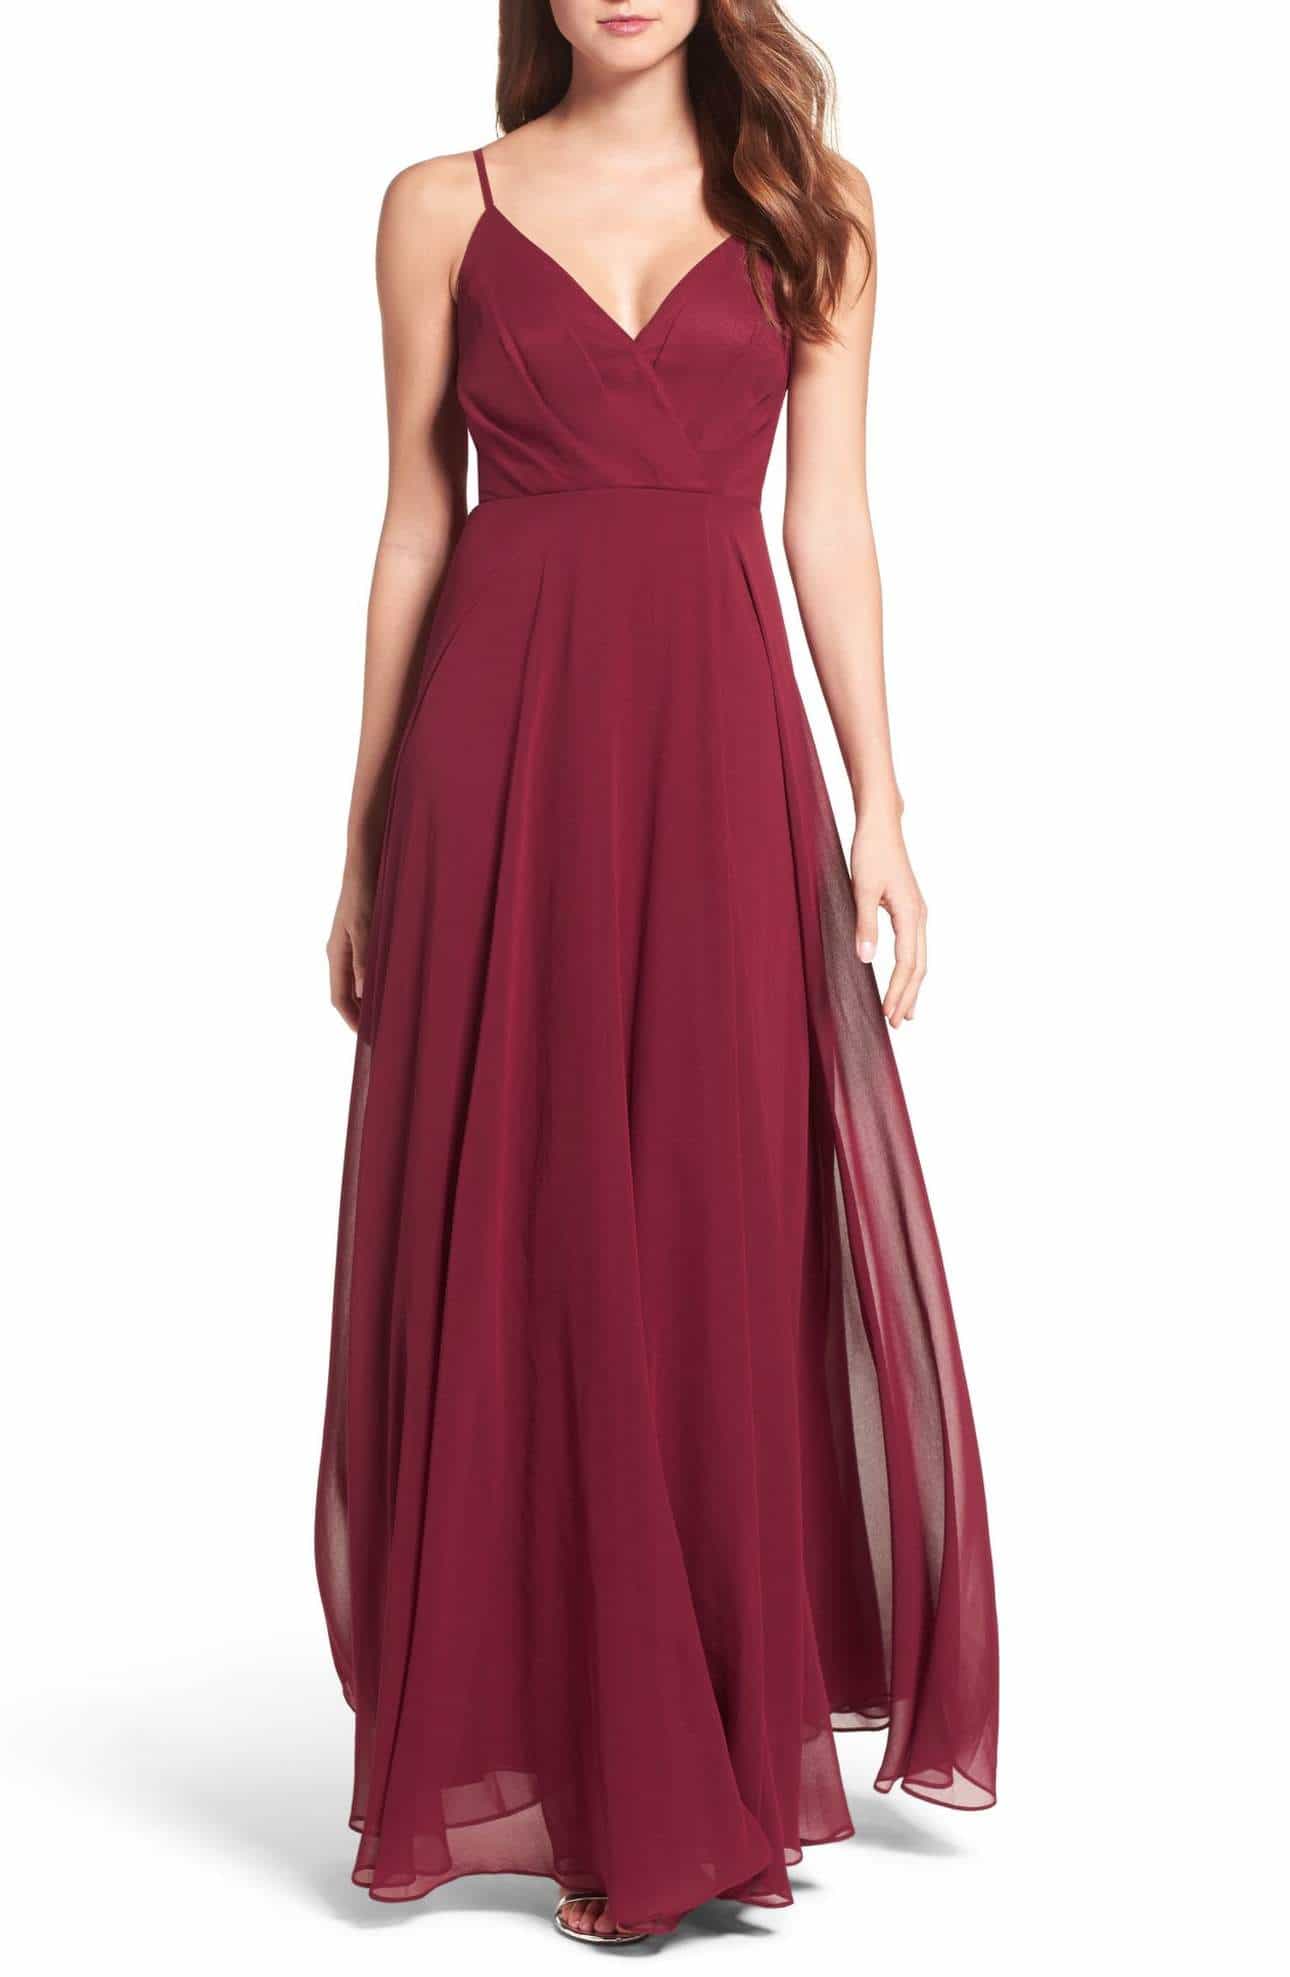 Burgundy Maxi Dress | Burgundy Dress for a Wedding